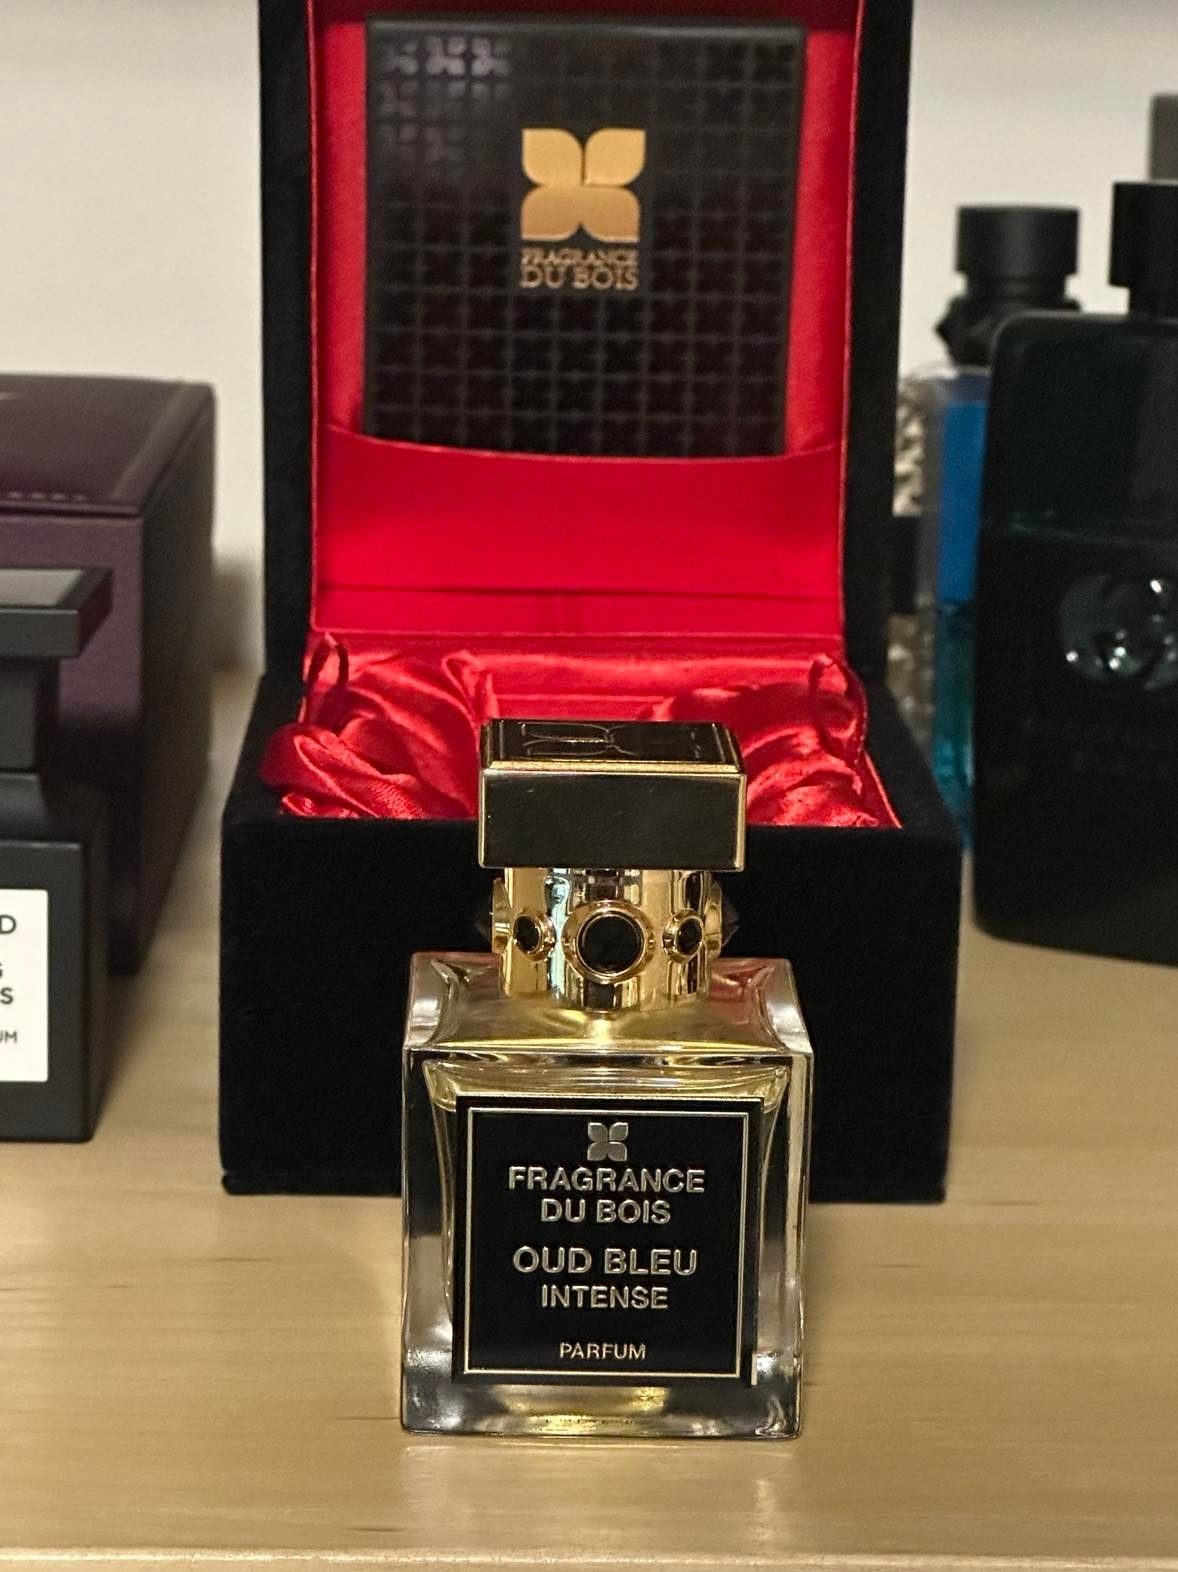 Giorgio Armani Prive Oud Royal Eau de Parfum 3.4 oz Spray.